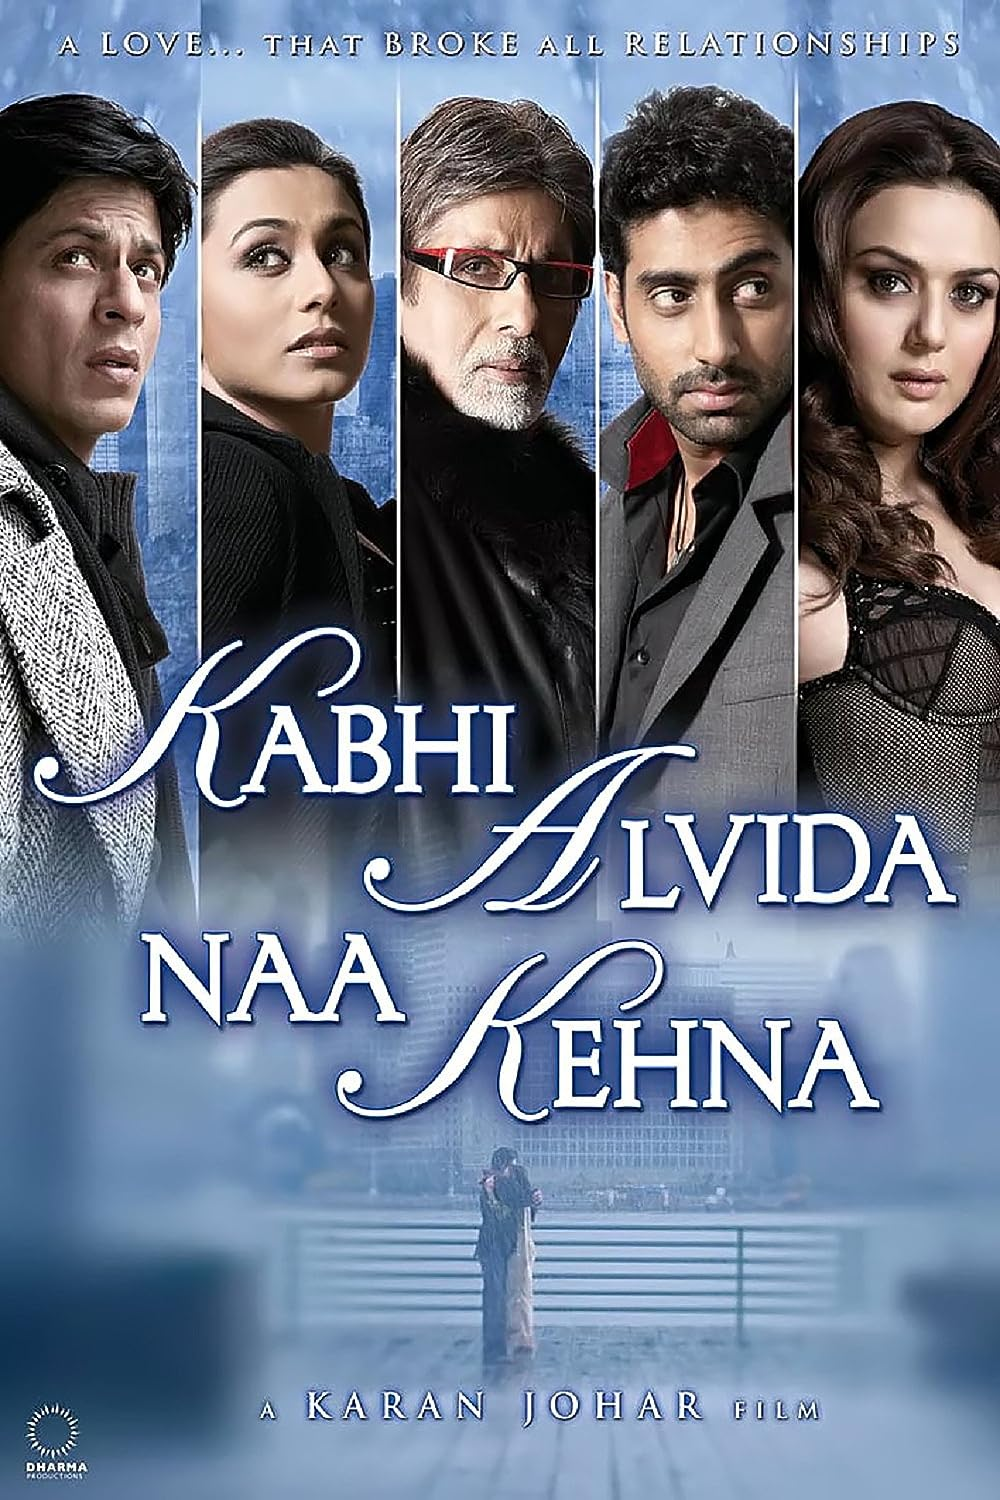 Romantic christmas movies - Kabhi Alvida Na Kehna